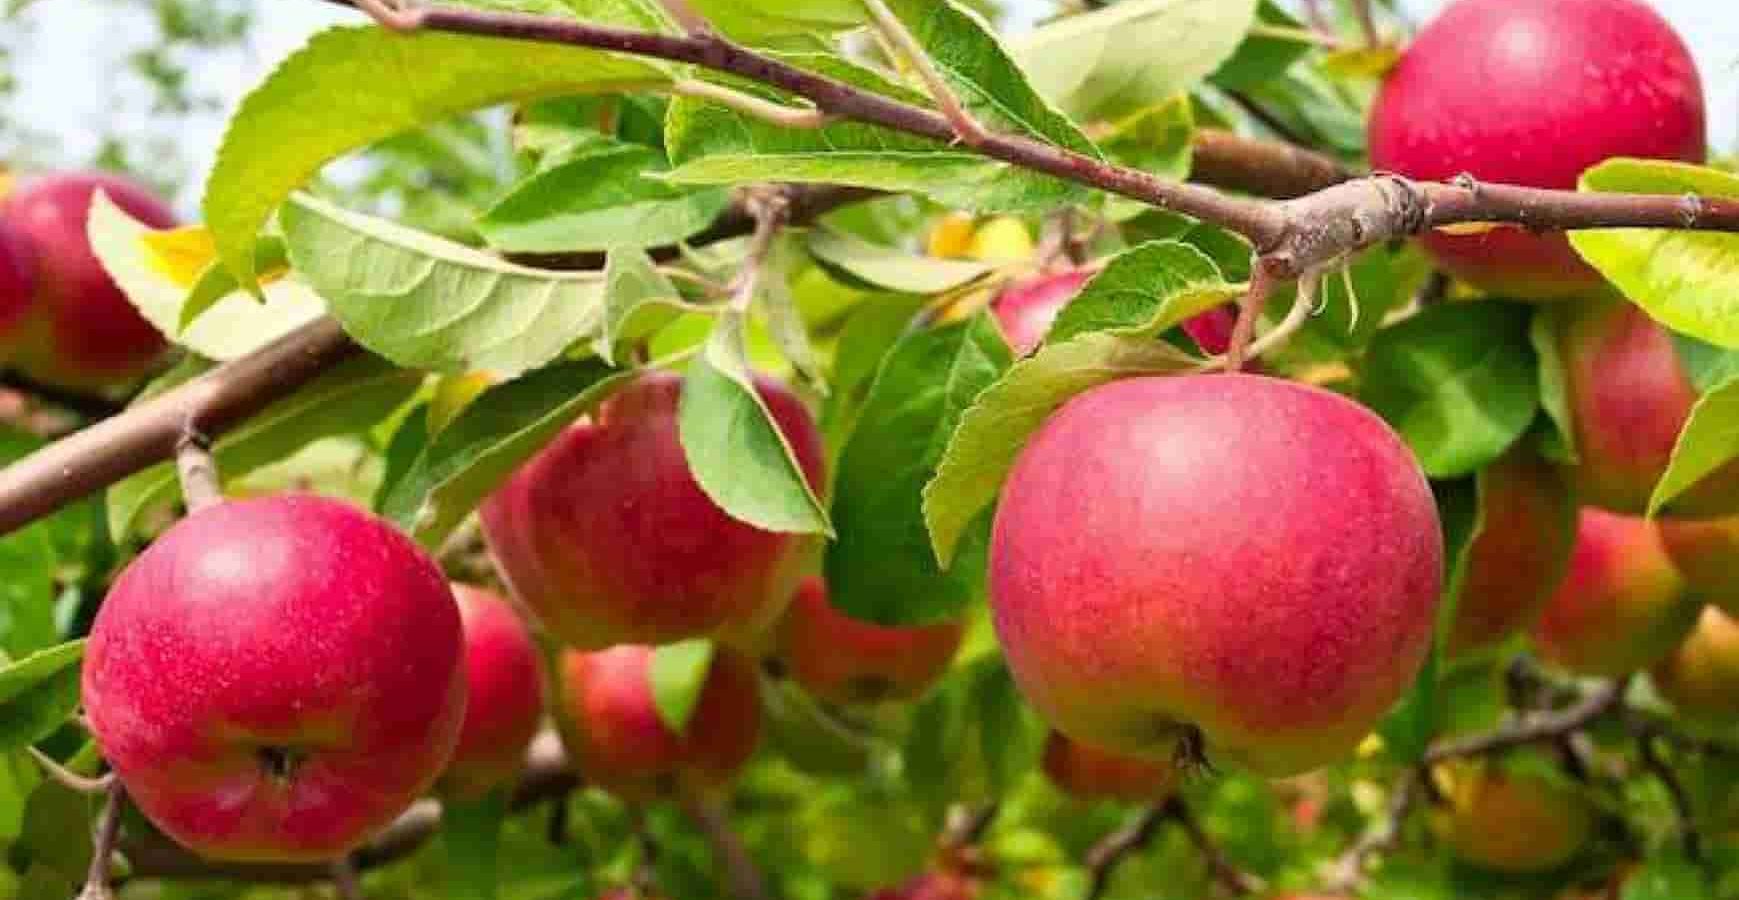 Autumn glory apple vs honeycrisp